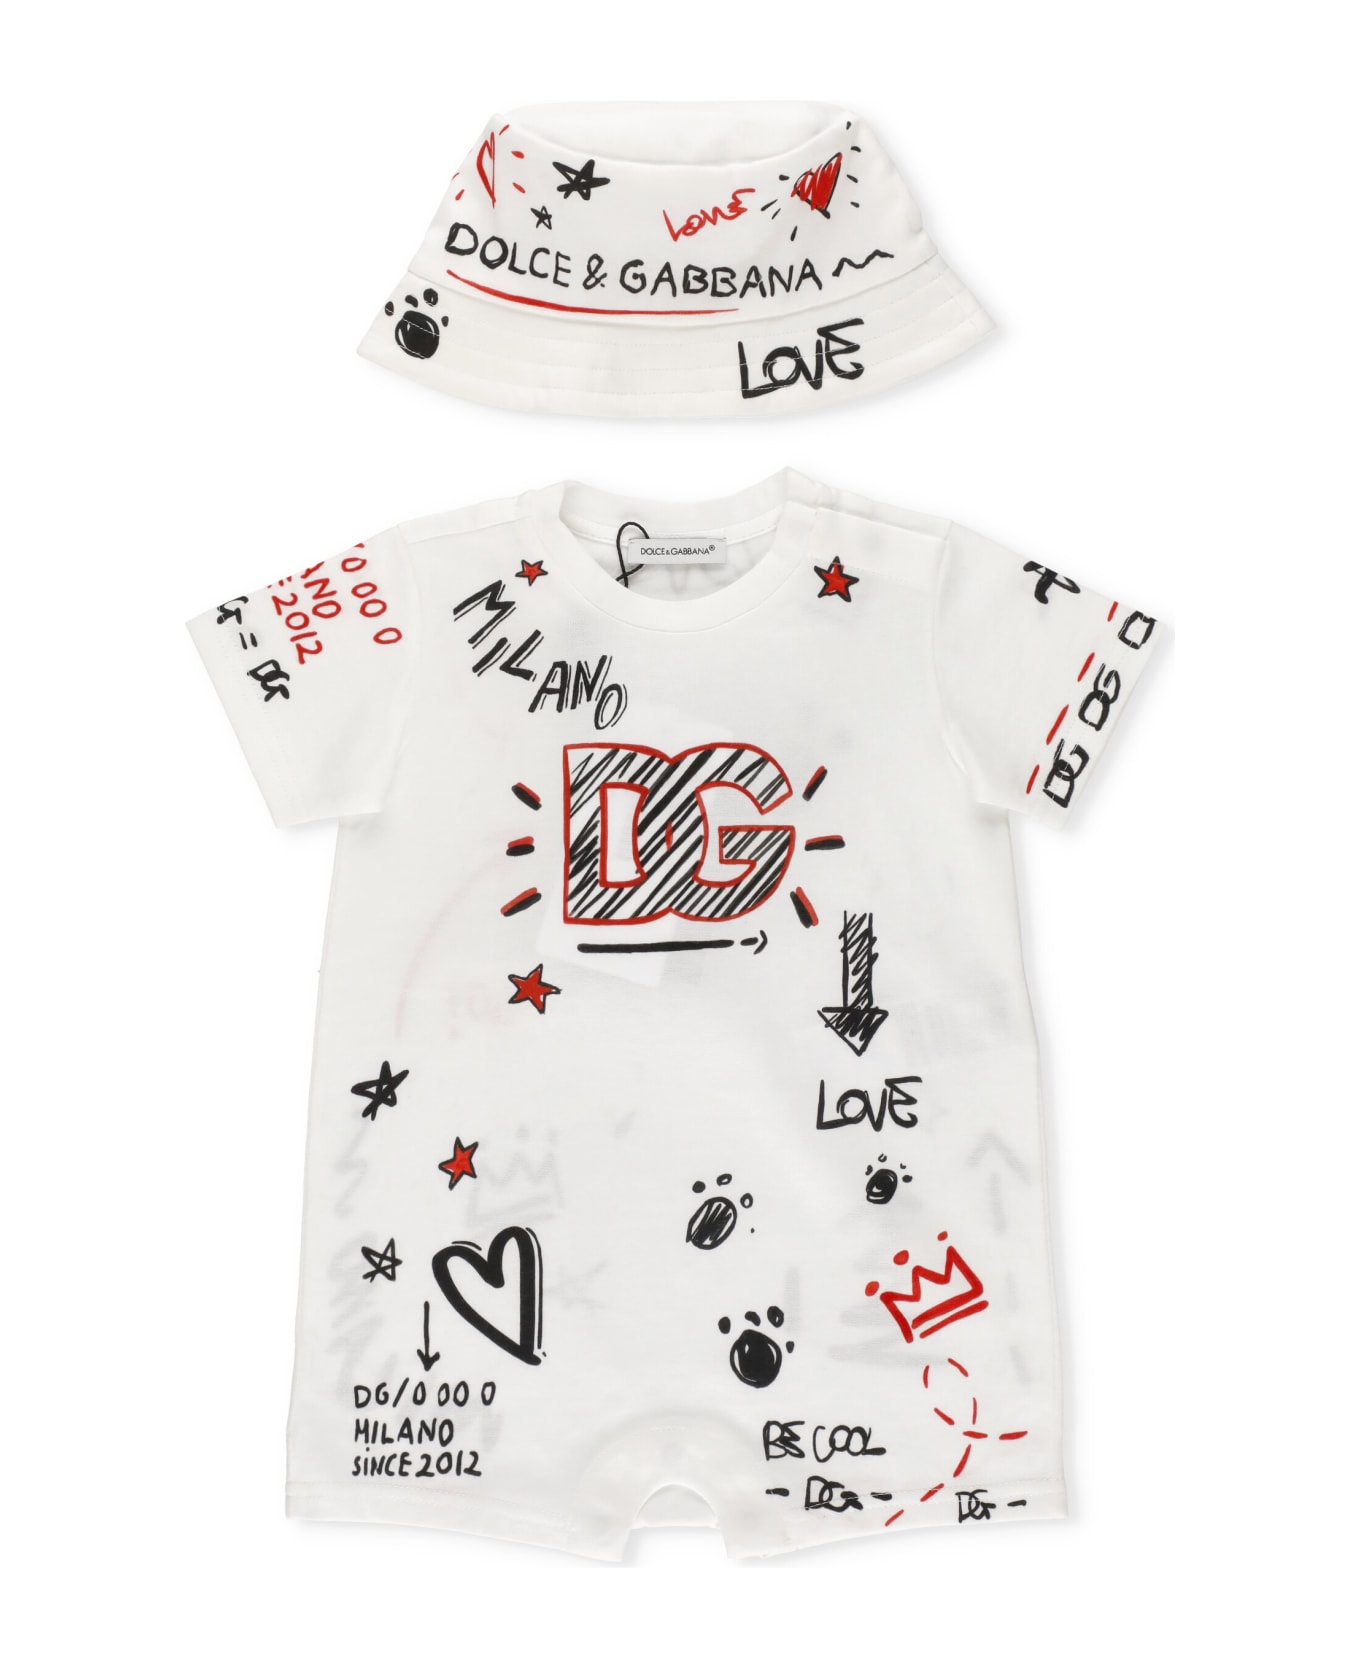 Dolce & Gabbana Baby Romper And Hat Set With Graffiti Print - DG MILANO F.B.OTTICO